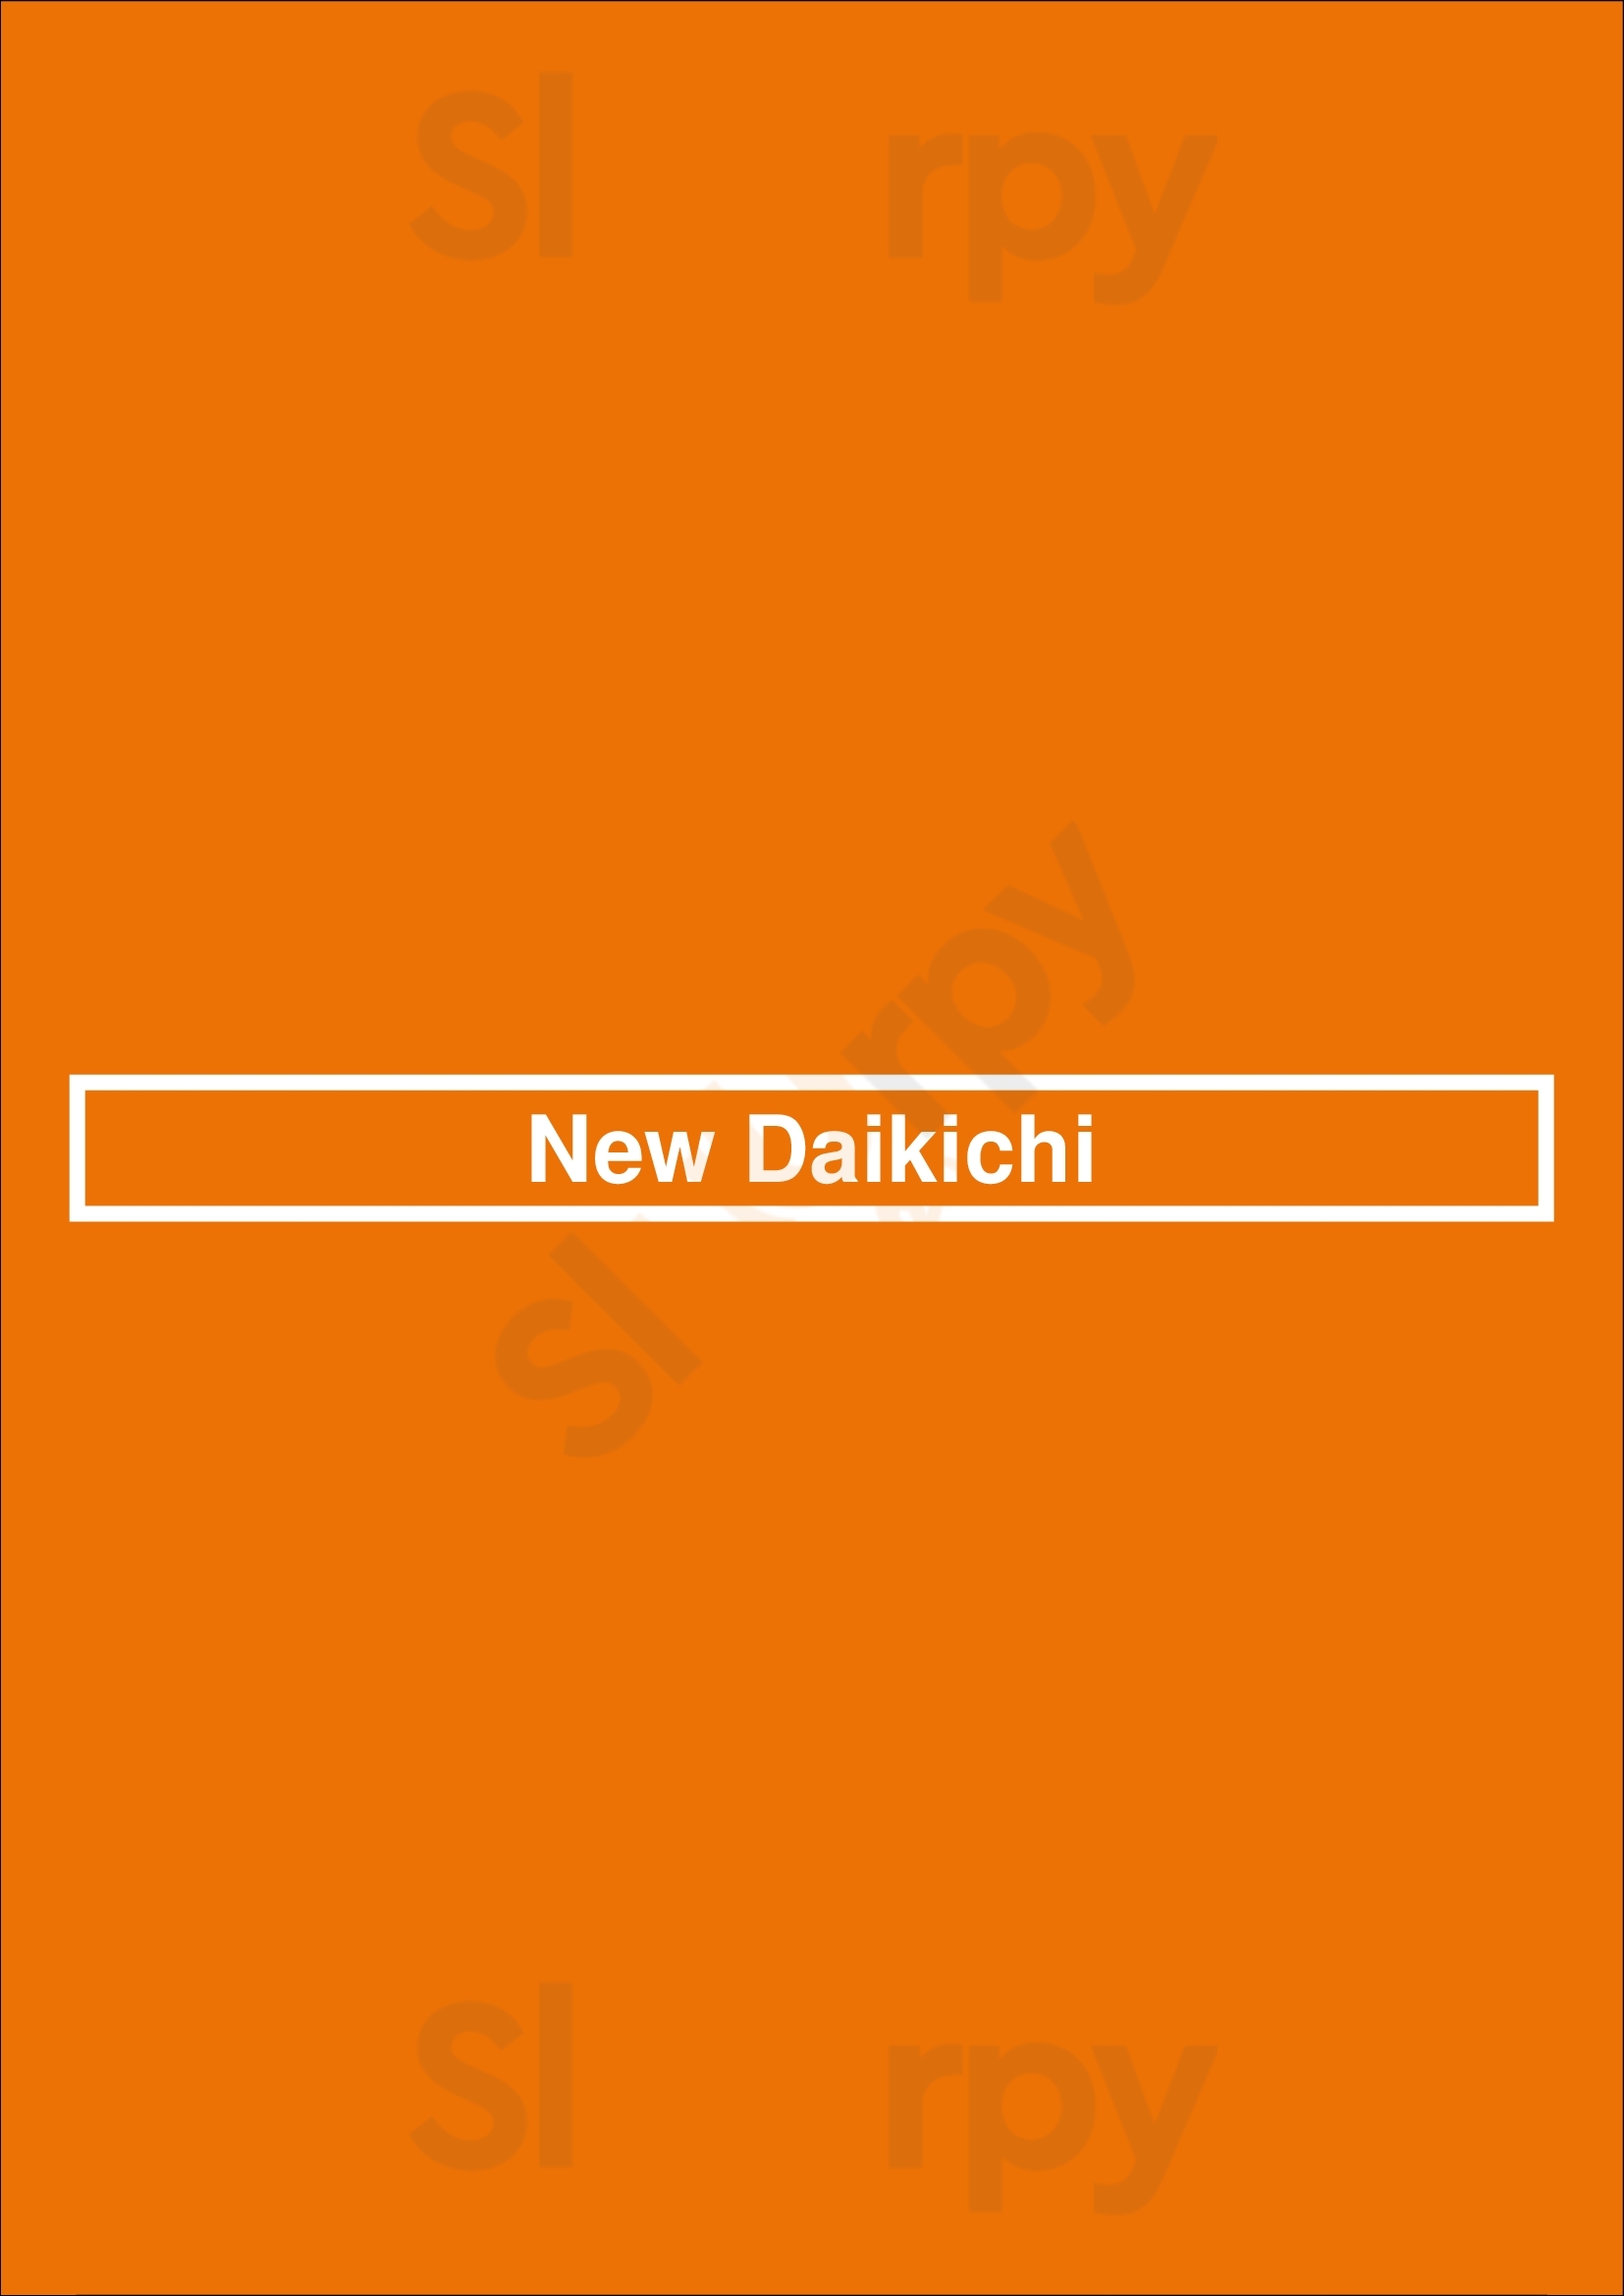 New Daikichi Bourg-la-Reine Menu - 1